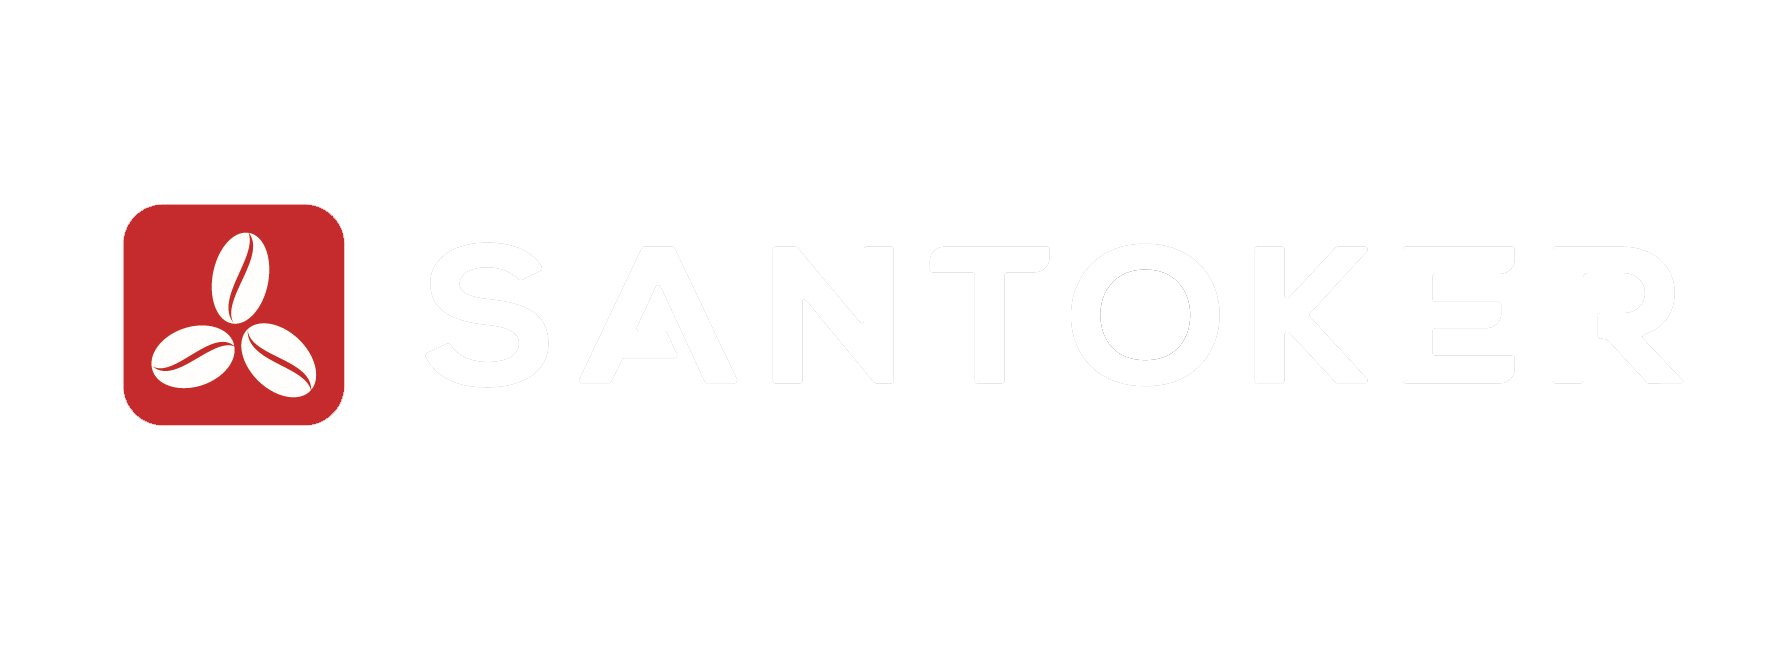 SANTOKER黑色背景logo